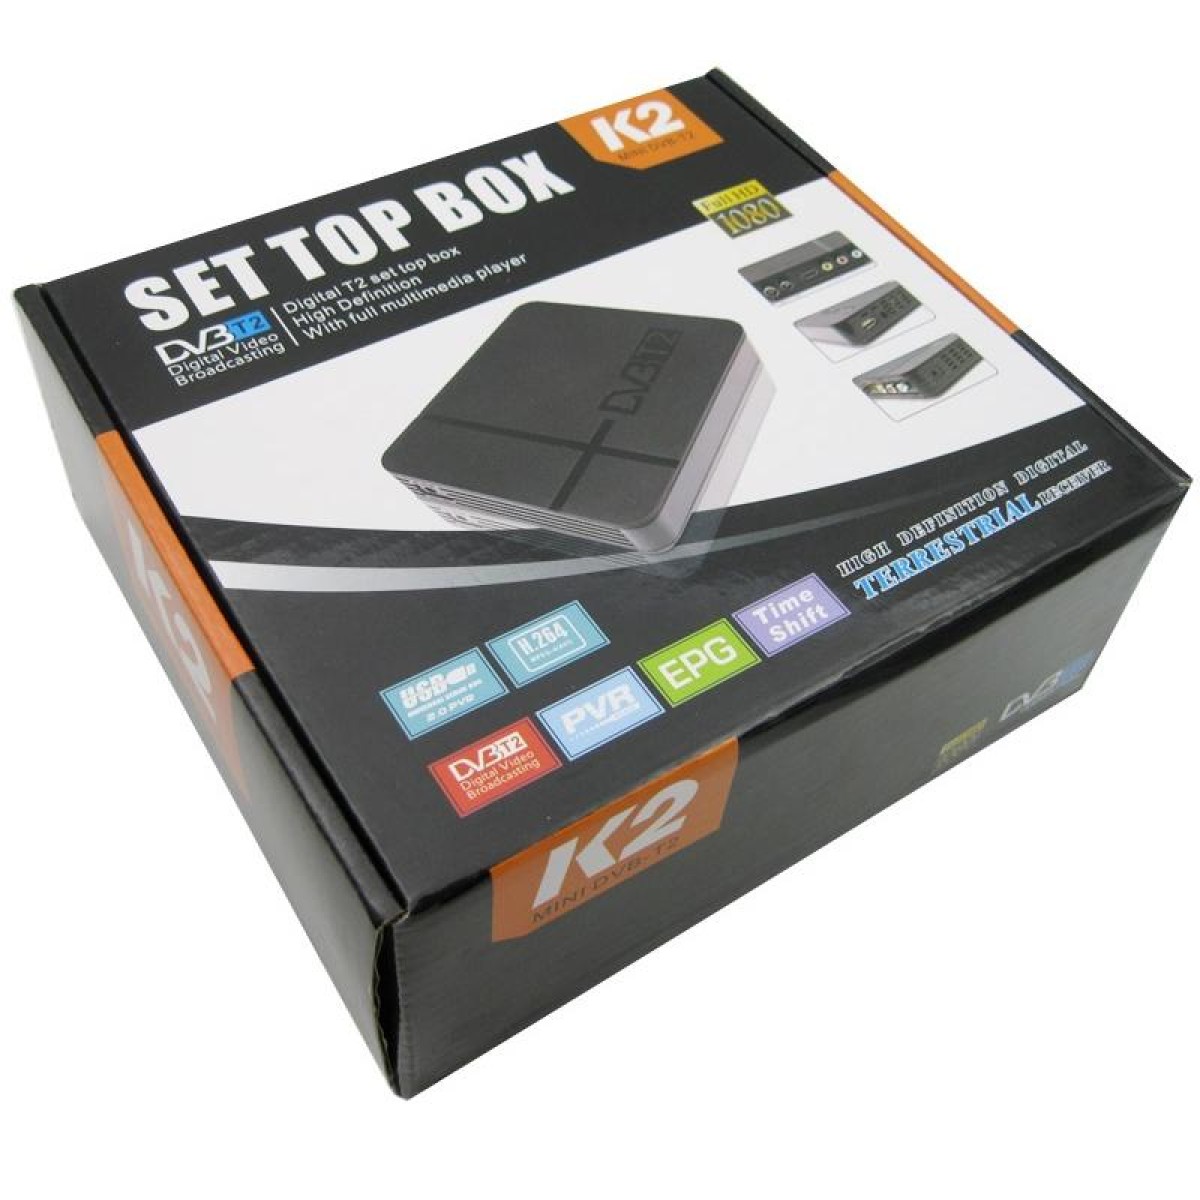 Mini Terrestrial Receiver HD DVB-T2 Set Top Box, Support USB / HDMI / MPEG4 /H.264(Black)